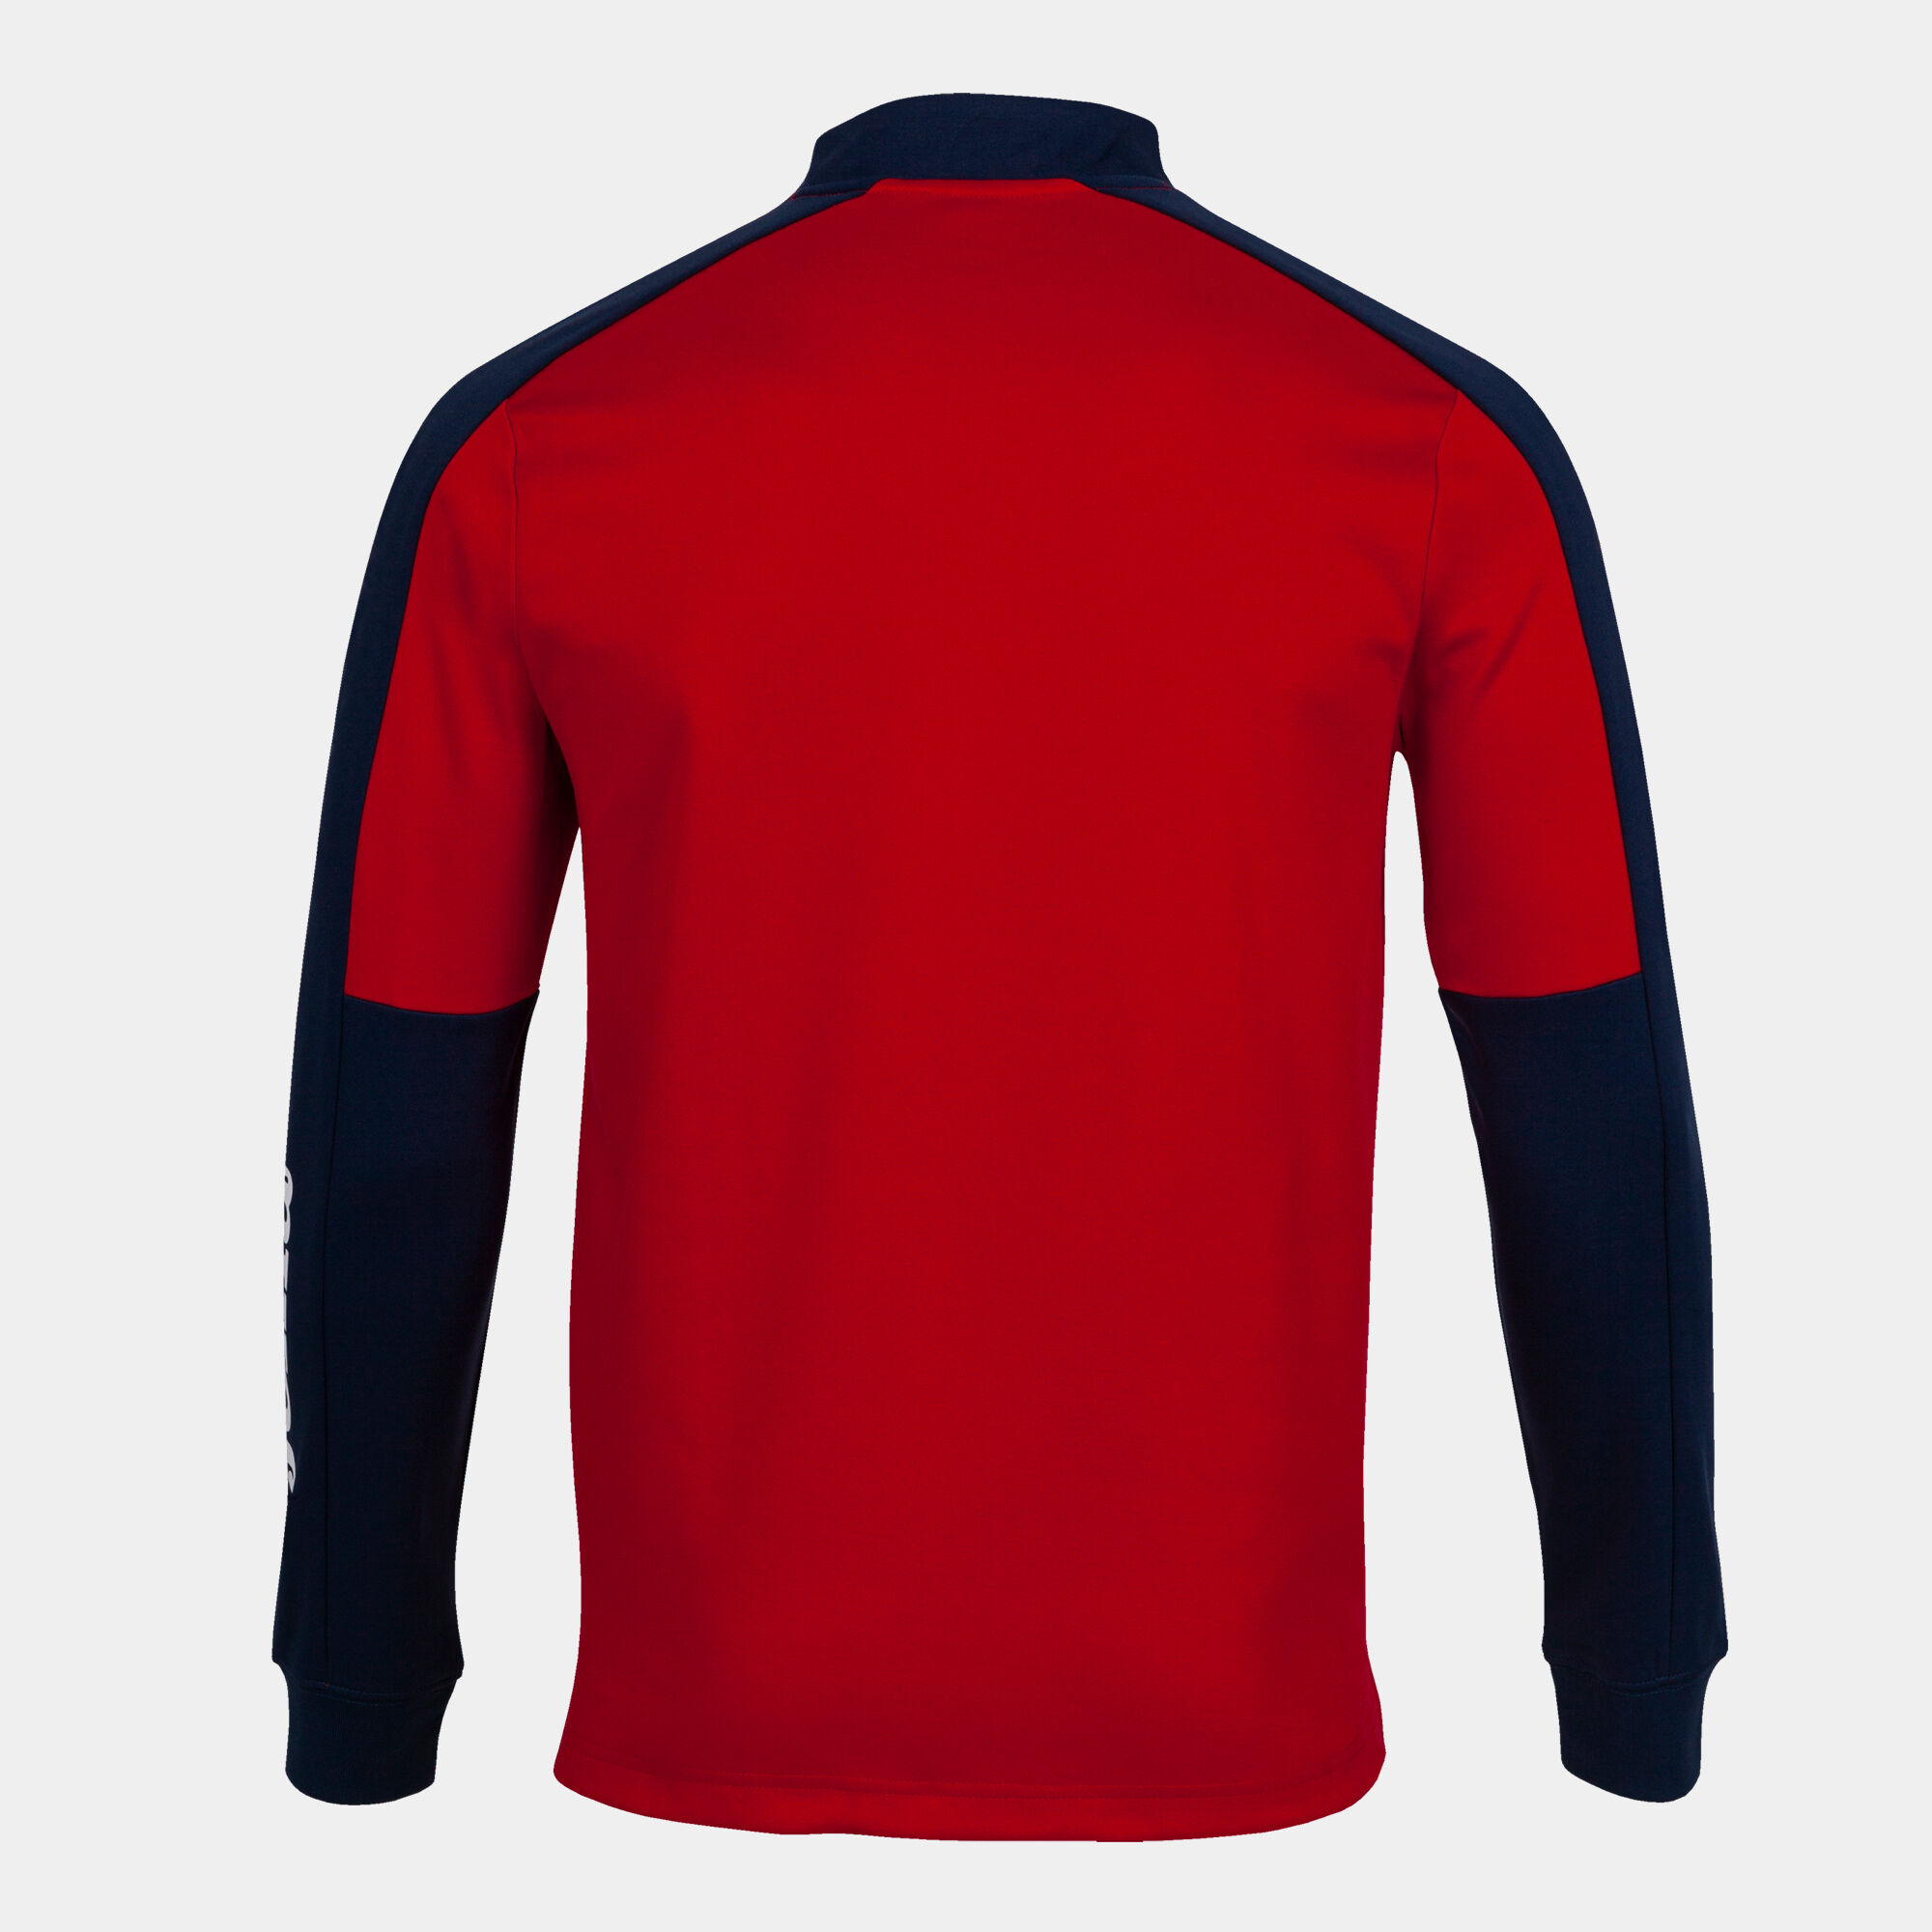 Sweat-shirt homme Eco Championship rouge bleu marine